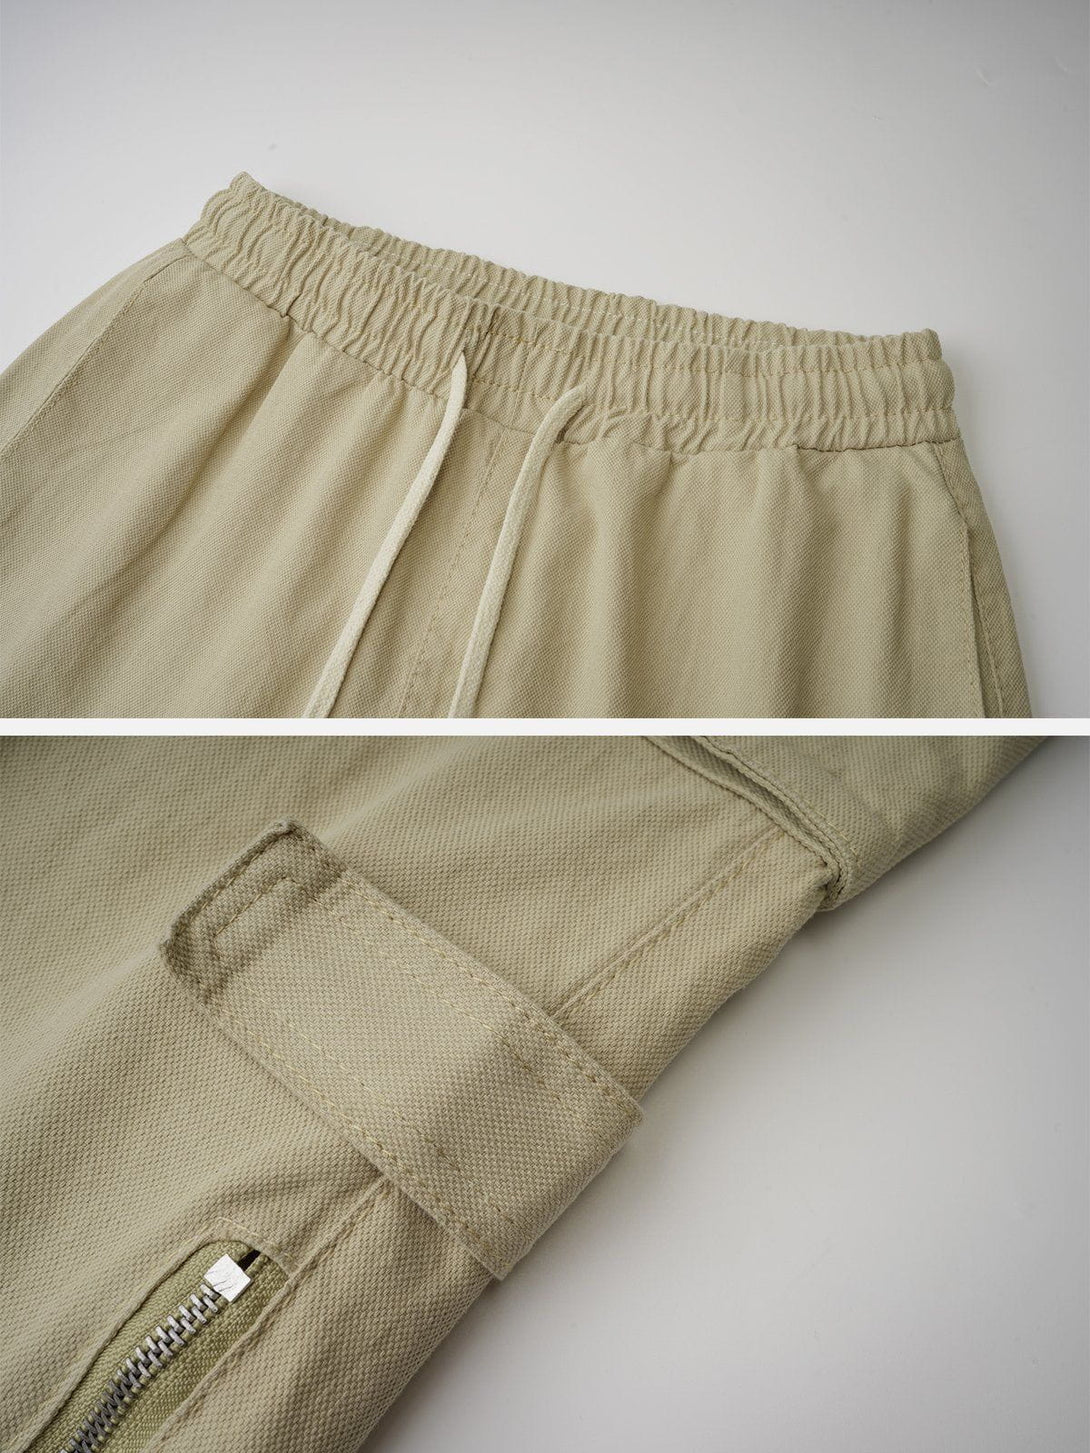 Majesda® - Multi-pocket Technical Zip Cargo Pants outfit ideas streetwear fashion